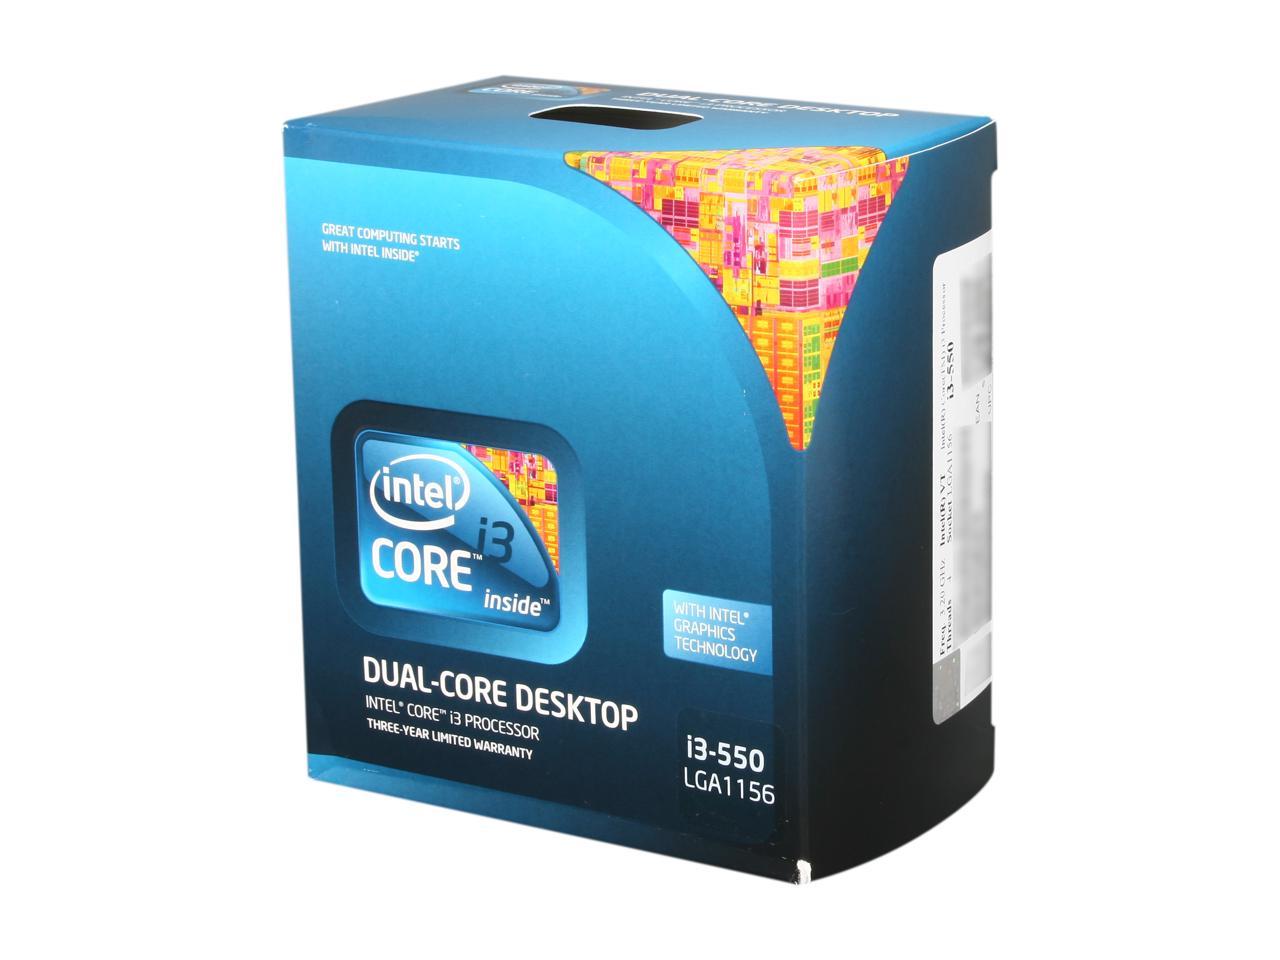 dennenboom Penetratie Gelach Used - Like New: Intel Core i3-550 - Core i3 Clarkdale Dual-Core 3.2 GHz  LGA 1156 73W Intel HD Graphics Desktop Processor - BX80616I3550 - Newegg.com